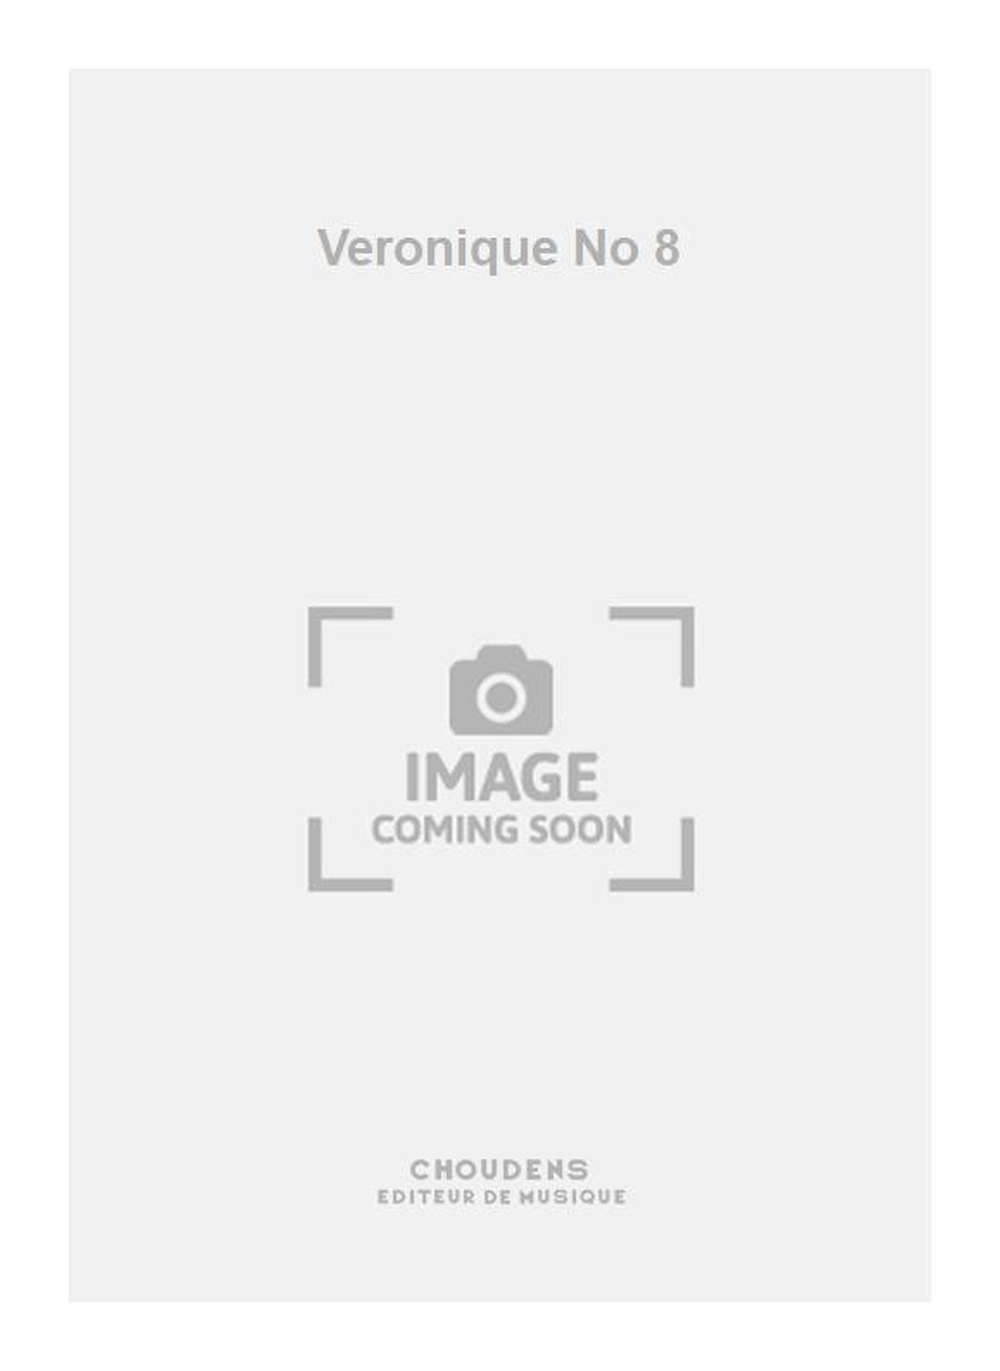 Messager: Veronique No 8